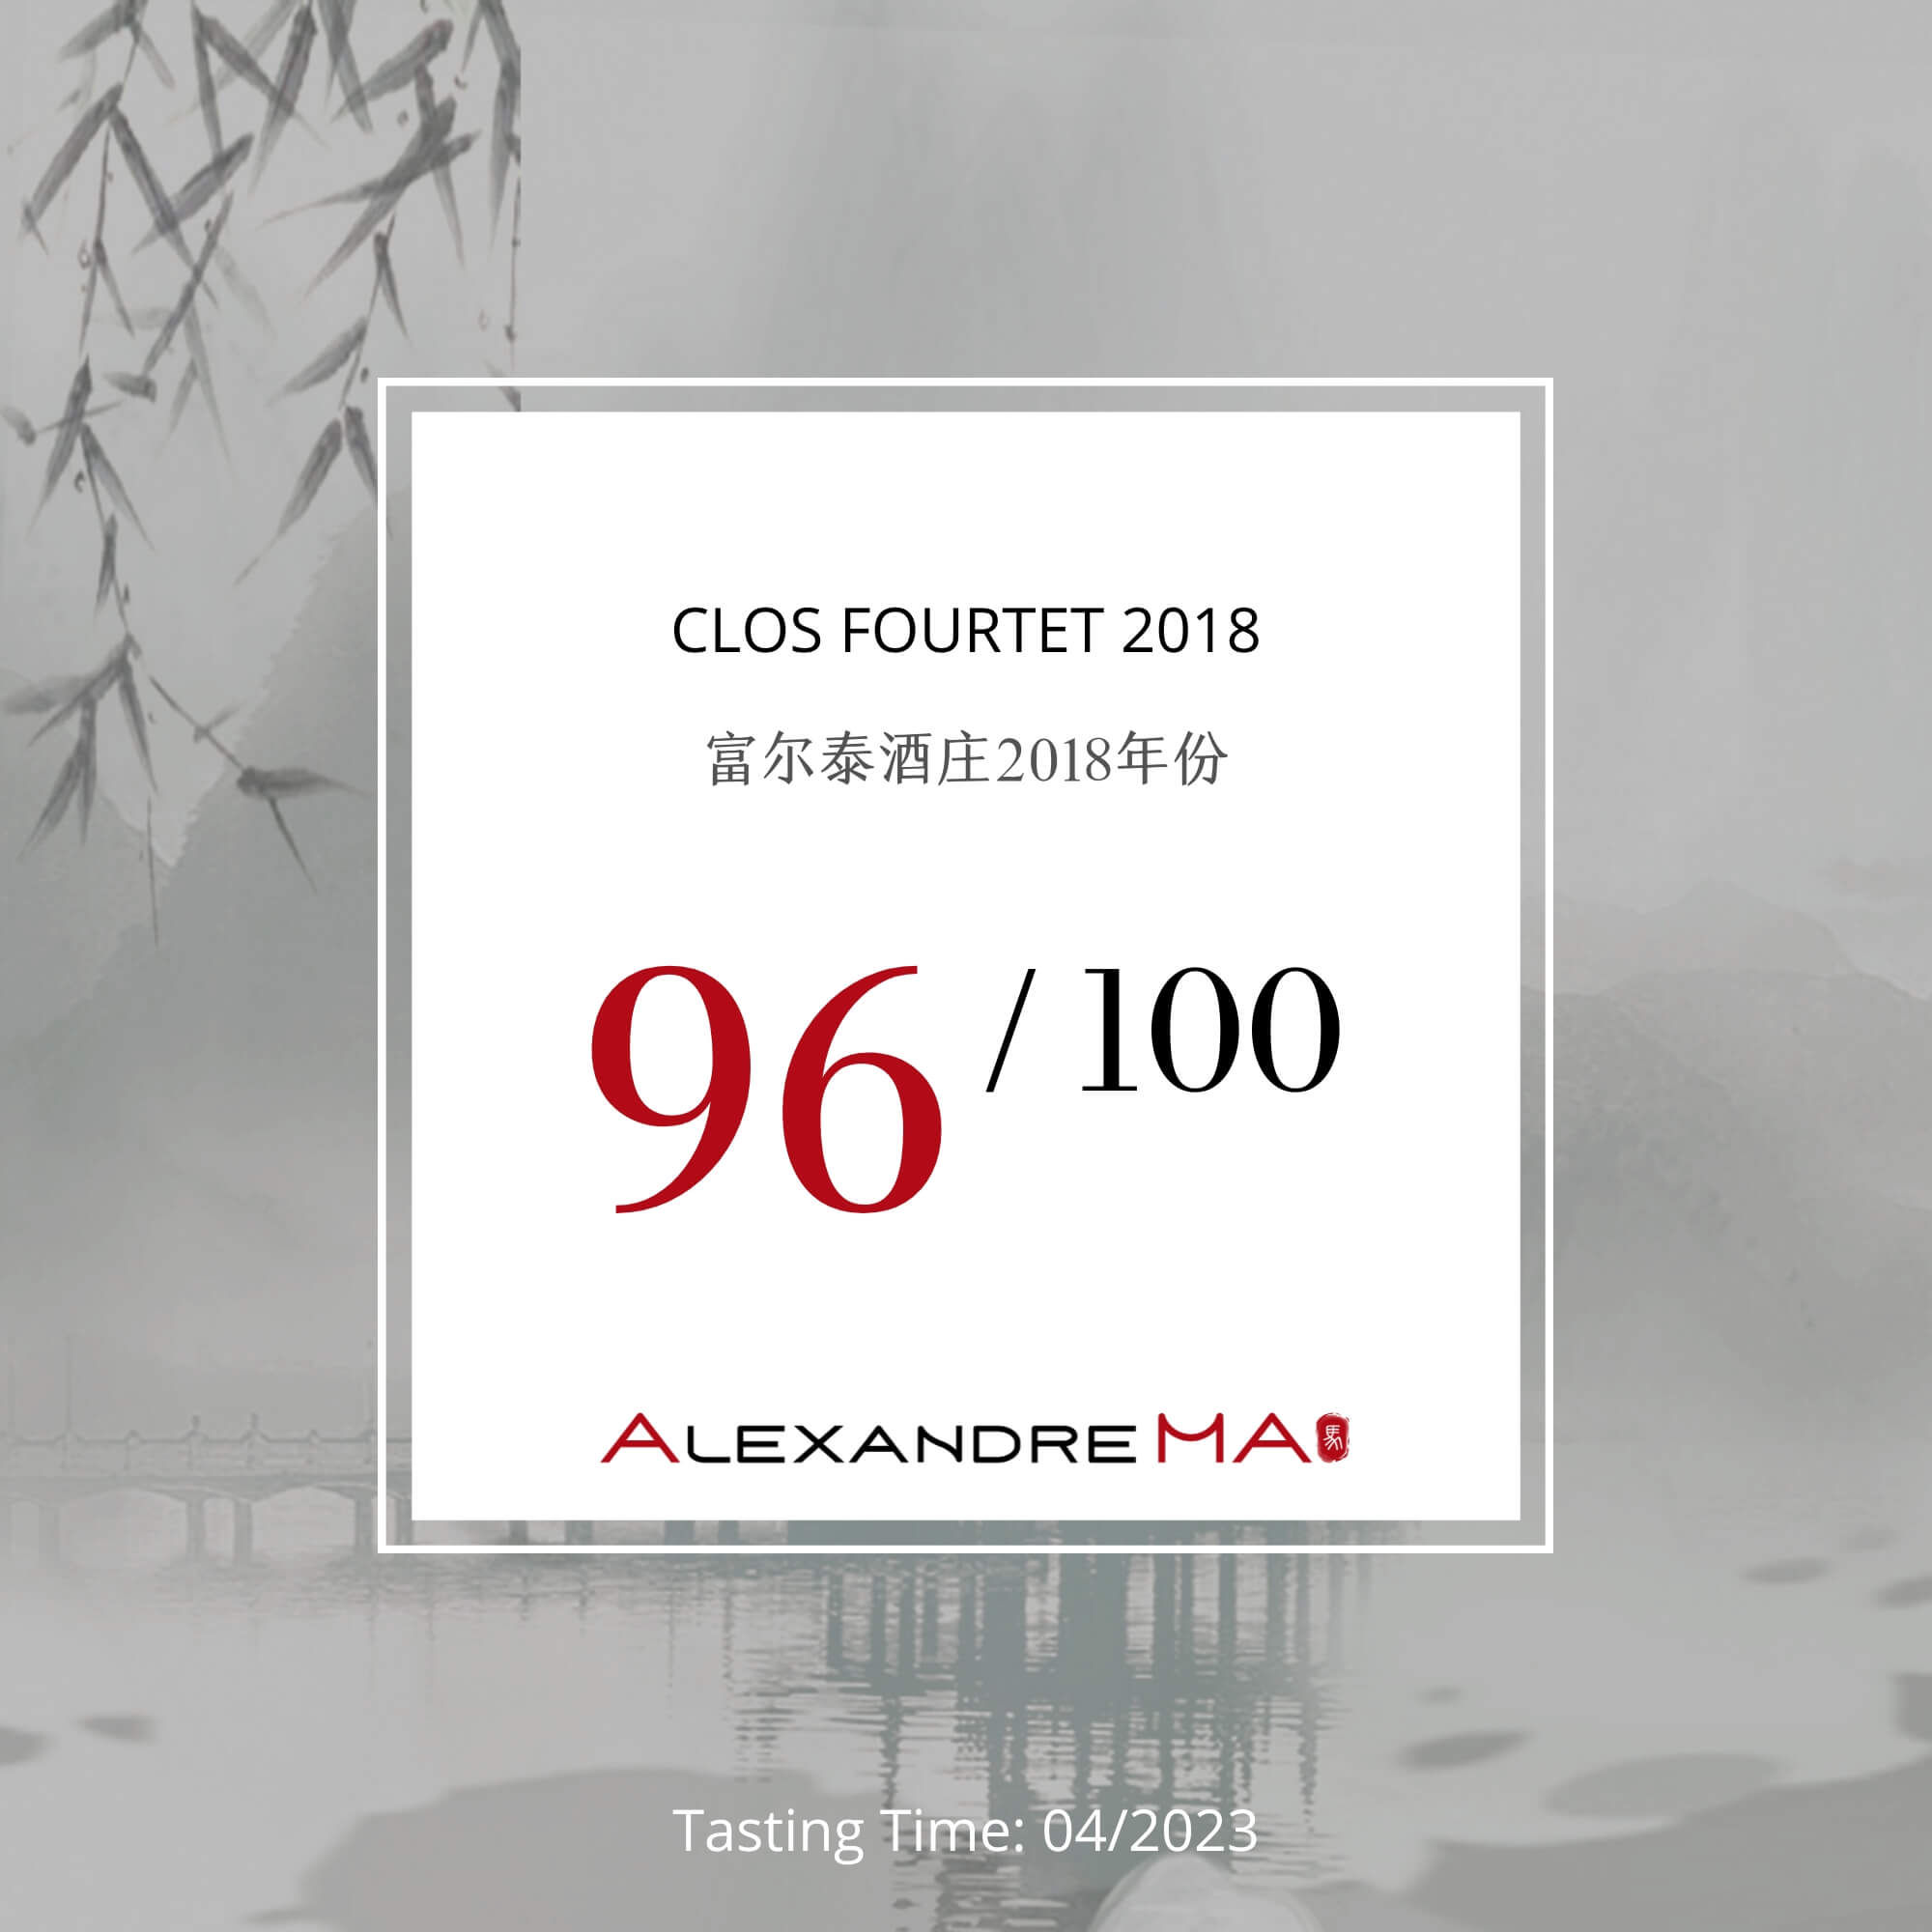 Clos Fourtet 2018 - Alexandre MA